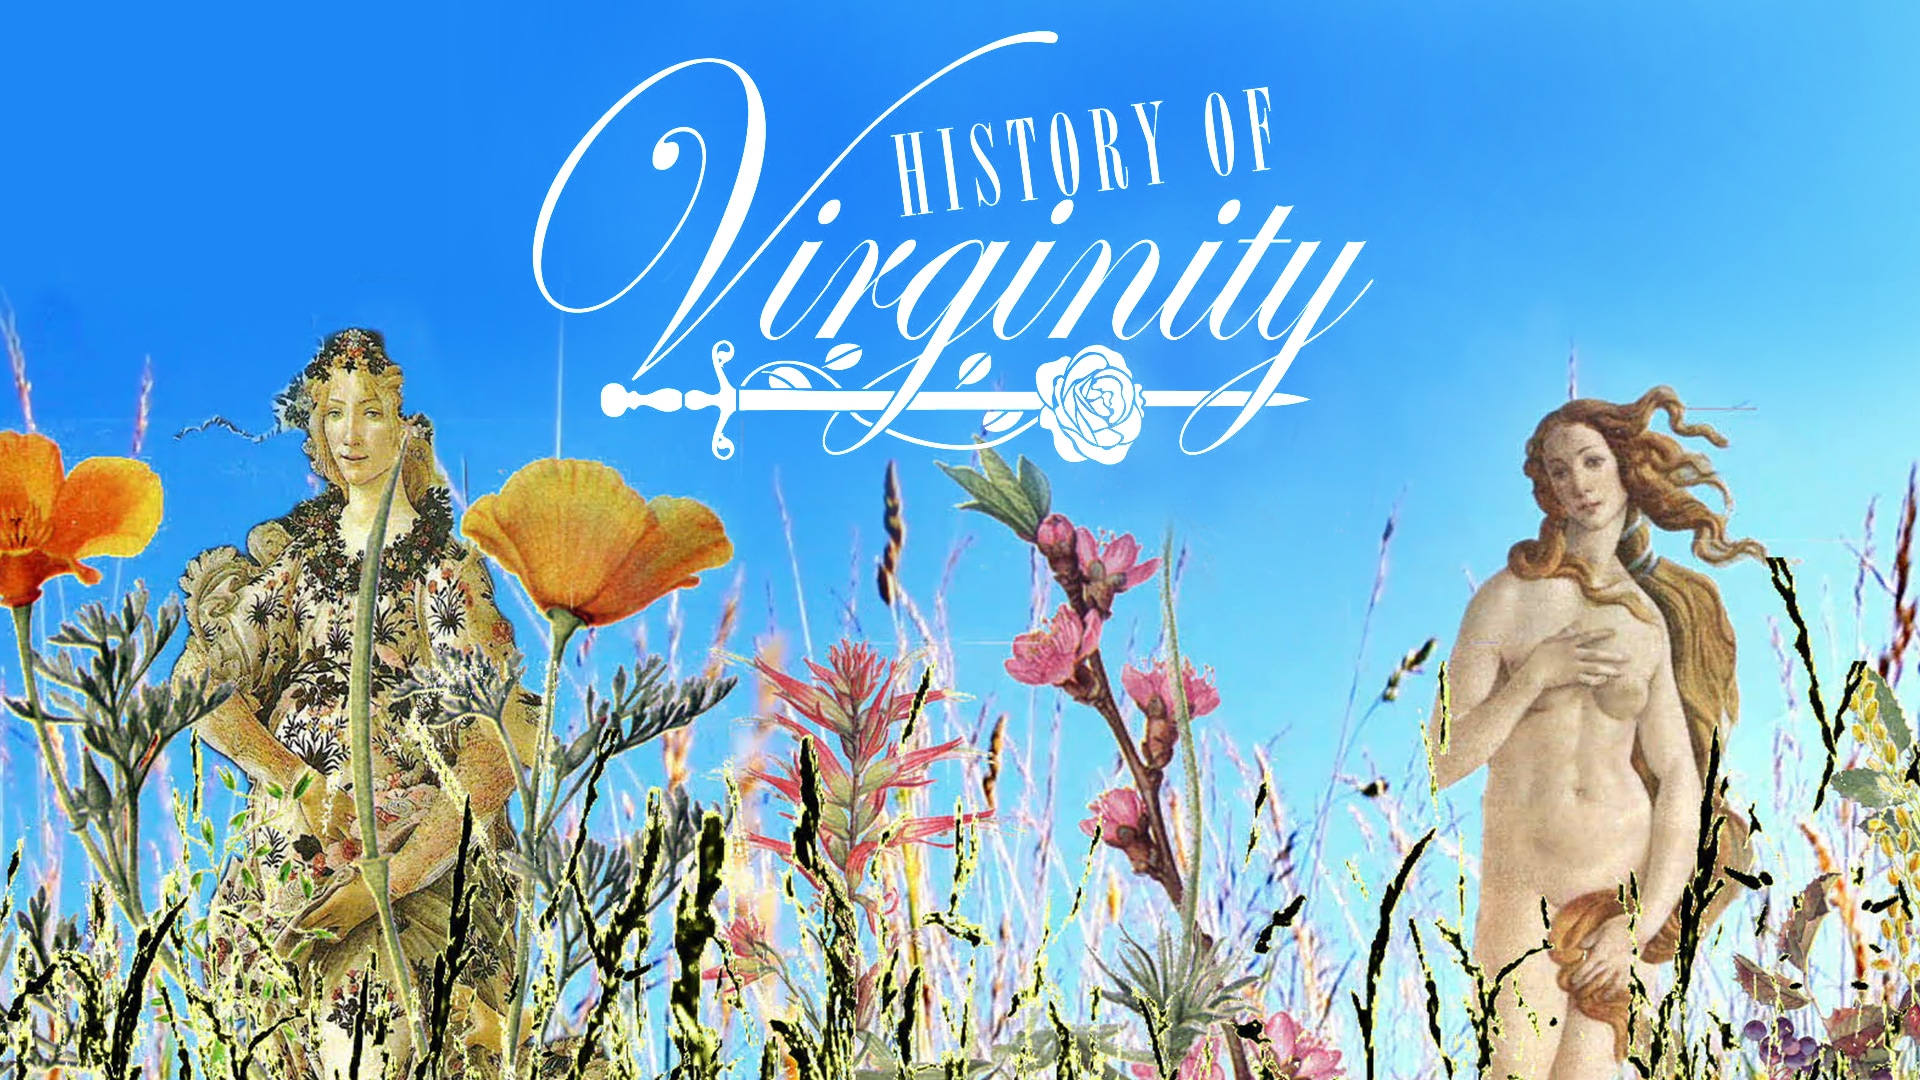 History of Virginity